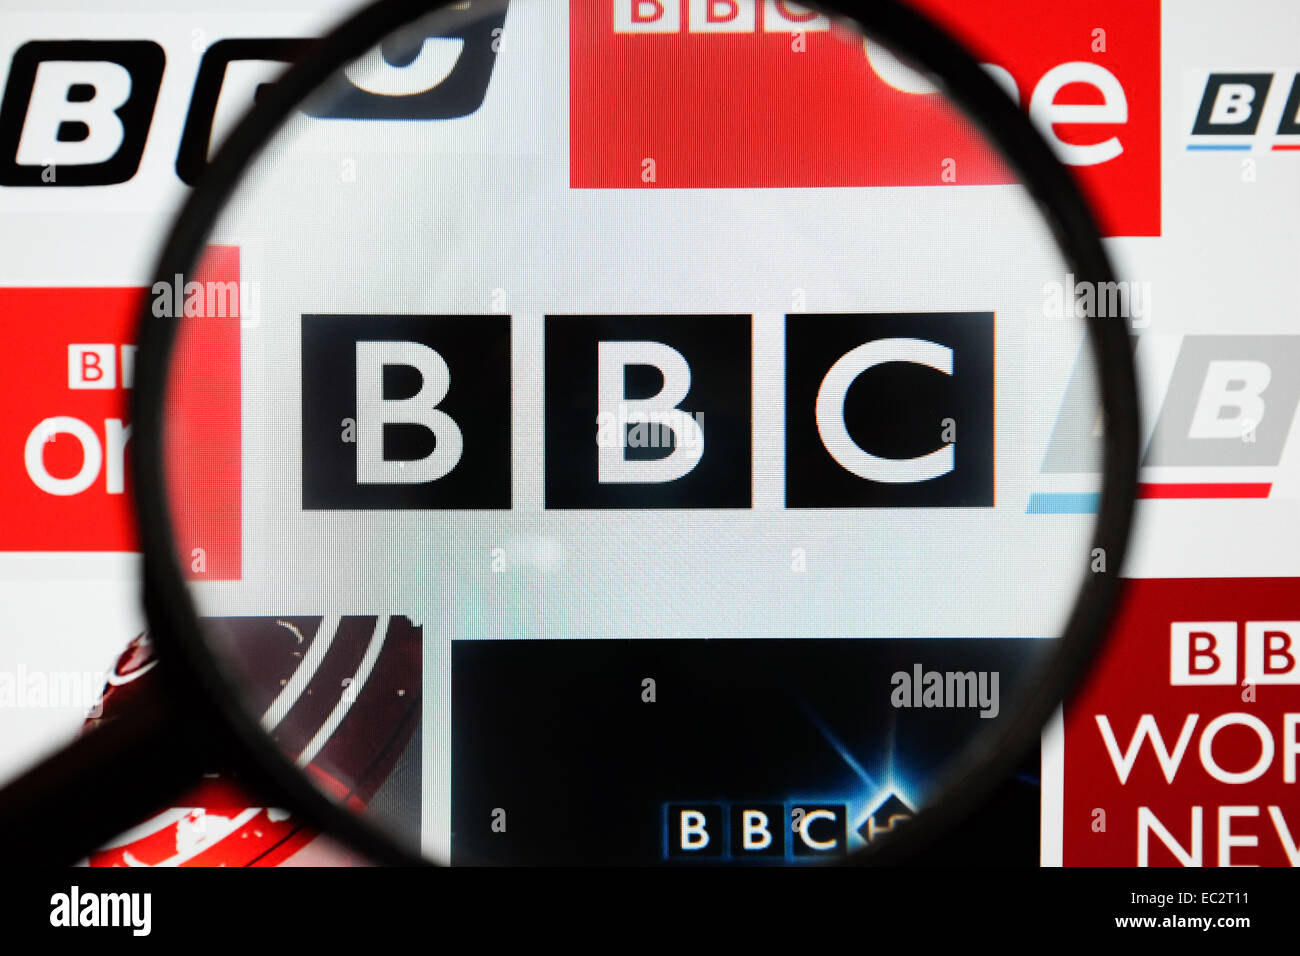 BBC logo shown through a magnifying glass. Stock Photo